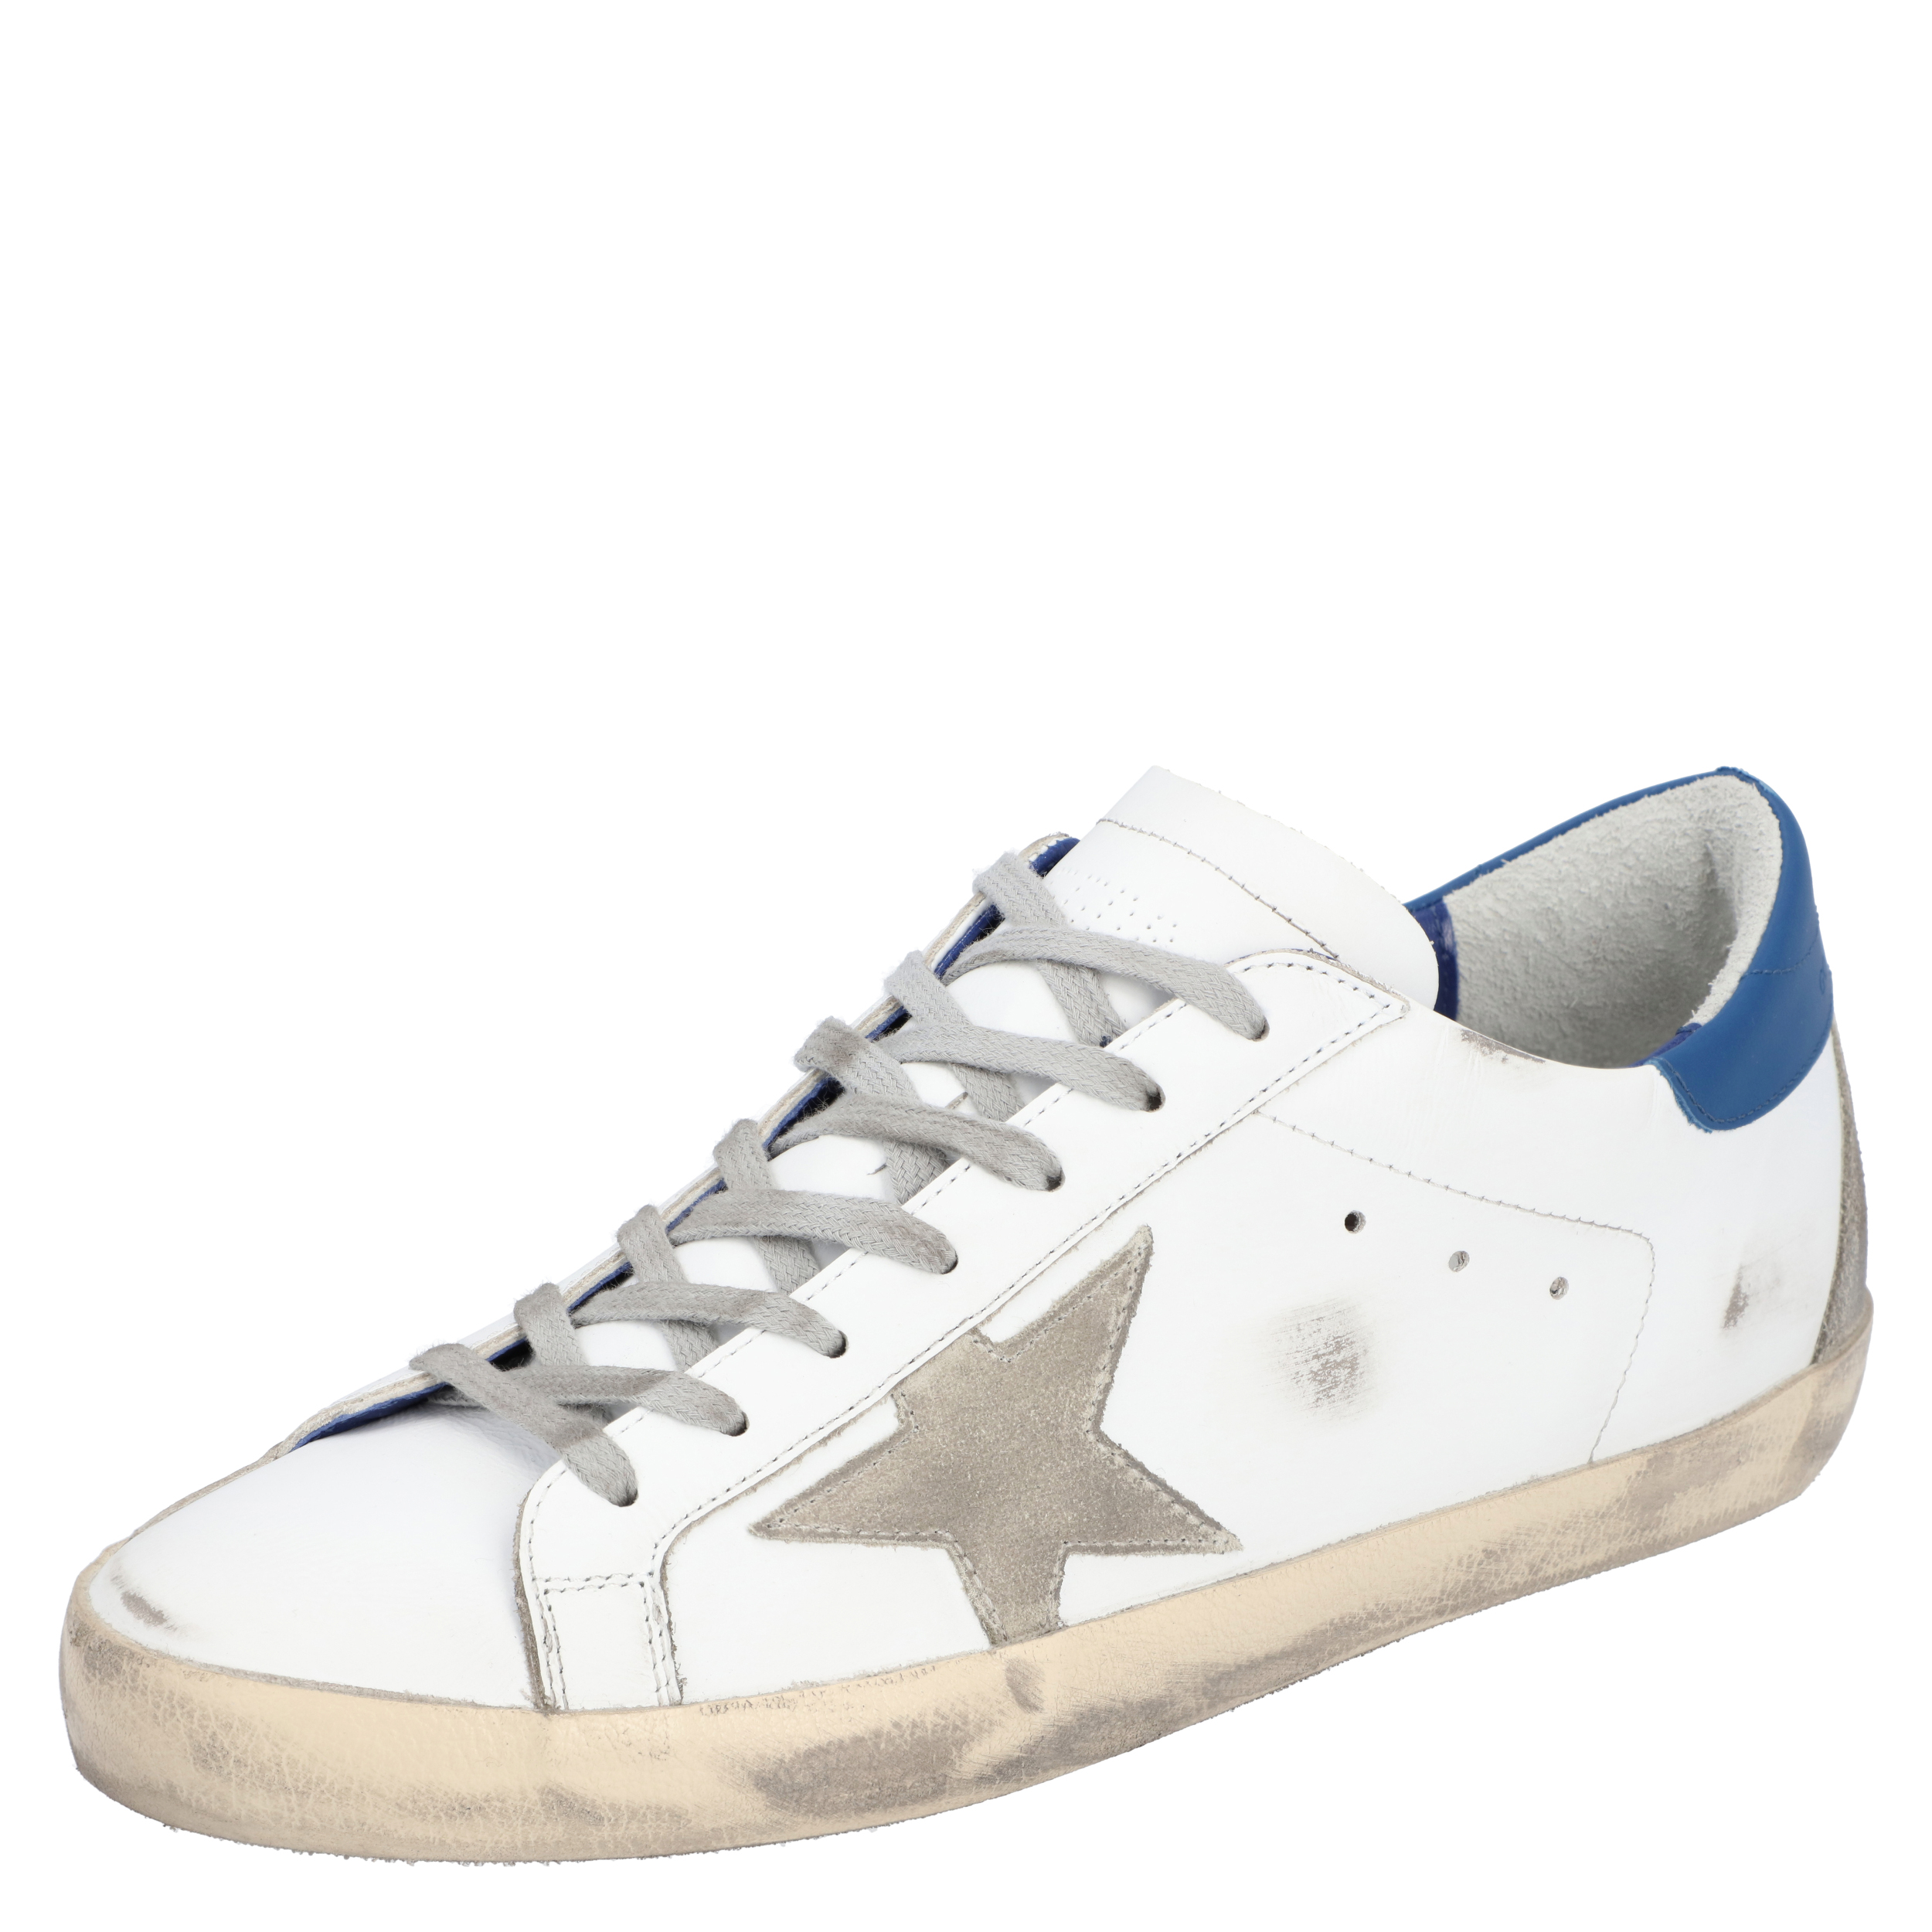 Golden Goose White/Blue Leather Superstar Sneaker Size EU 44